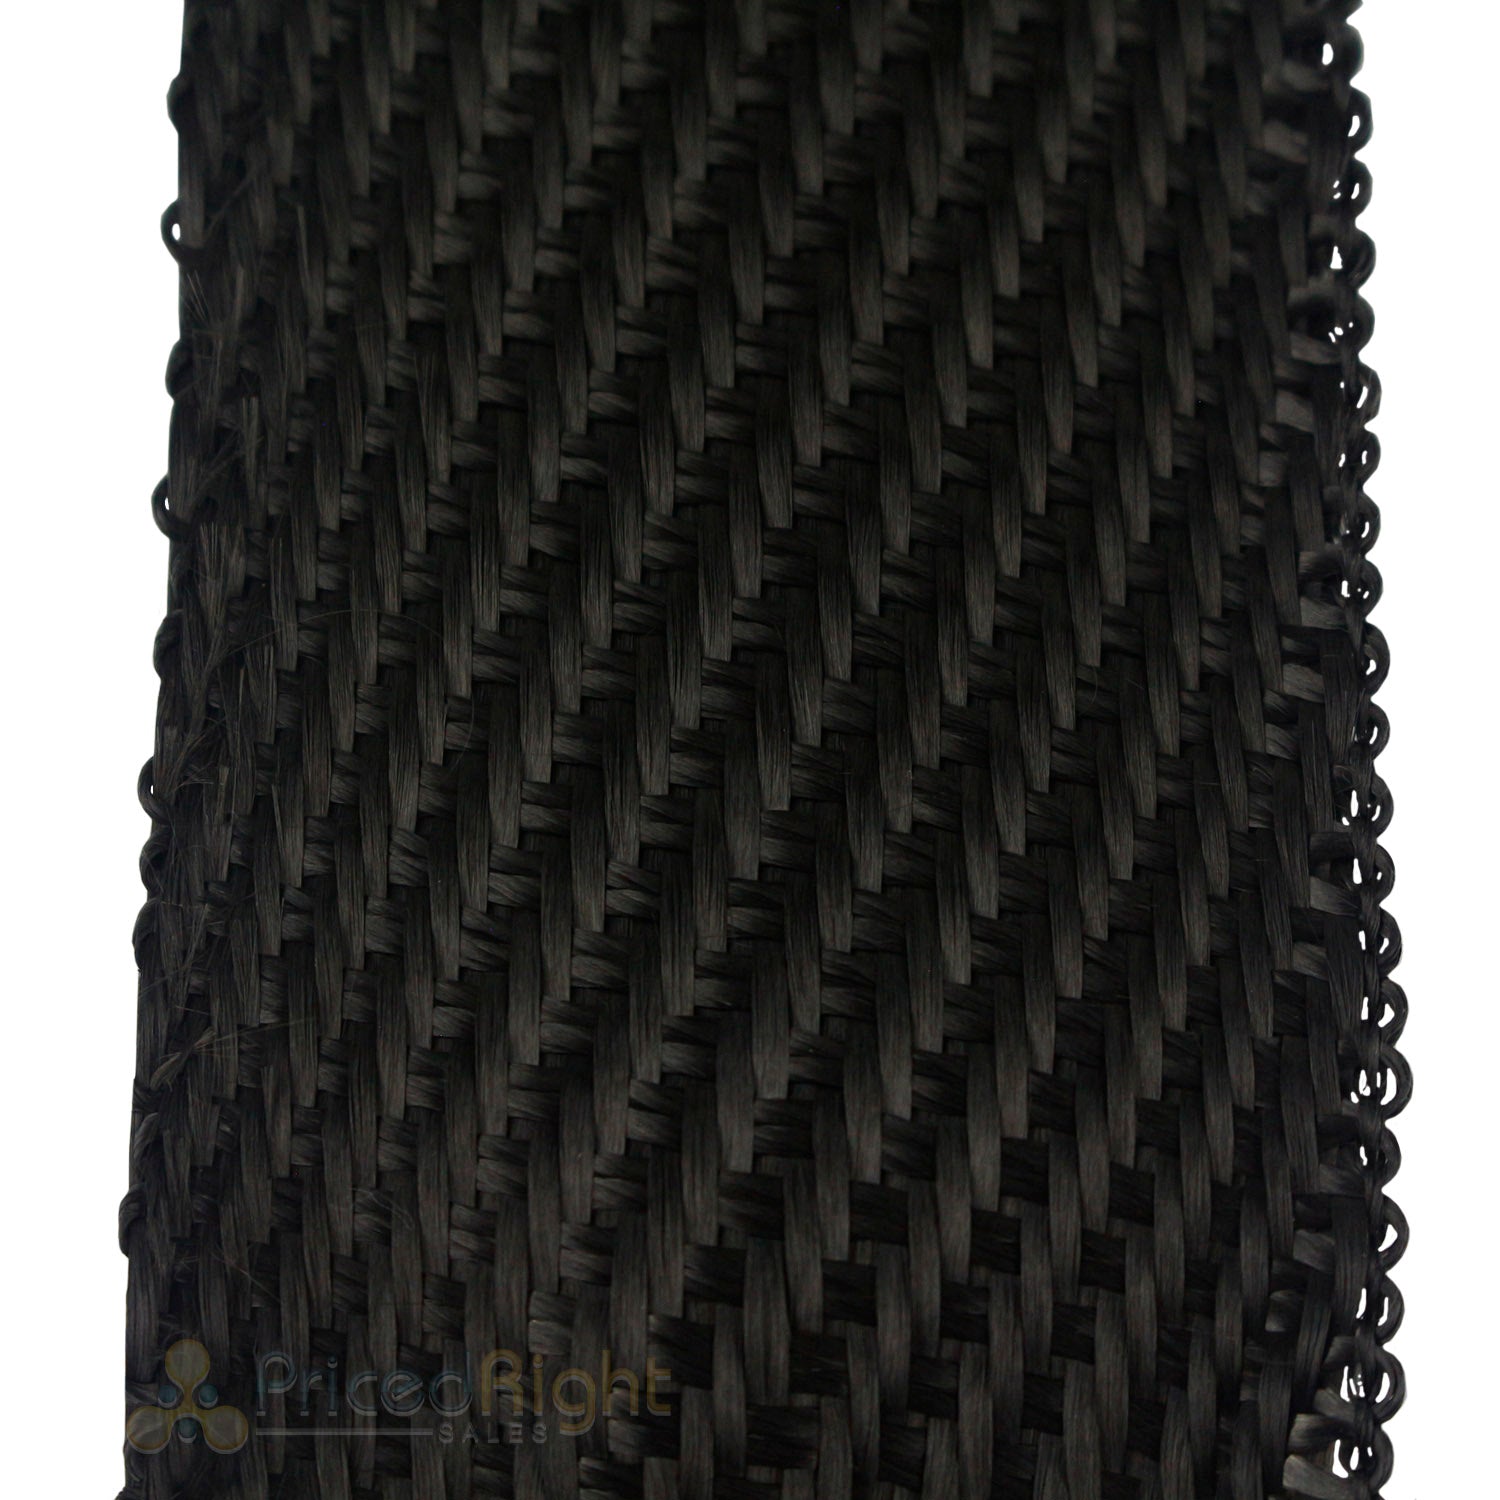 DEI Black Titanium Underhood Exhaust Wrap 2 in x 50 ft Roll Carbon Fiber 010003